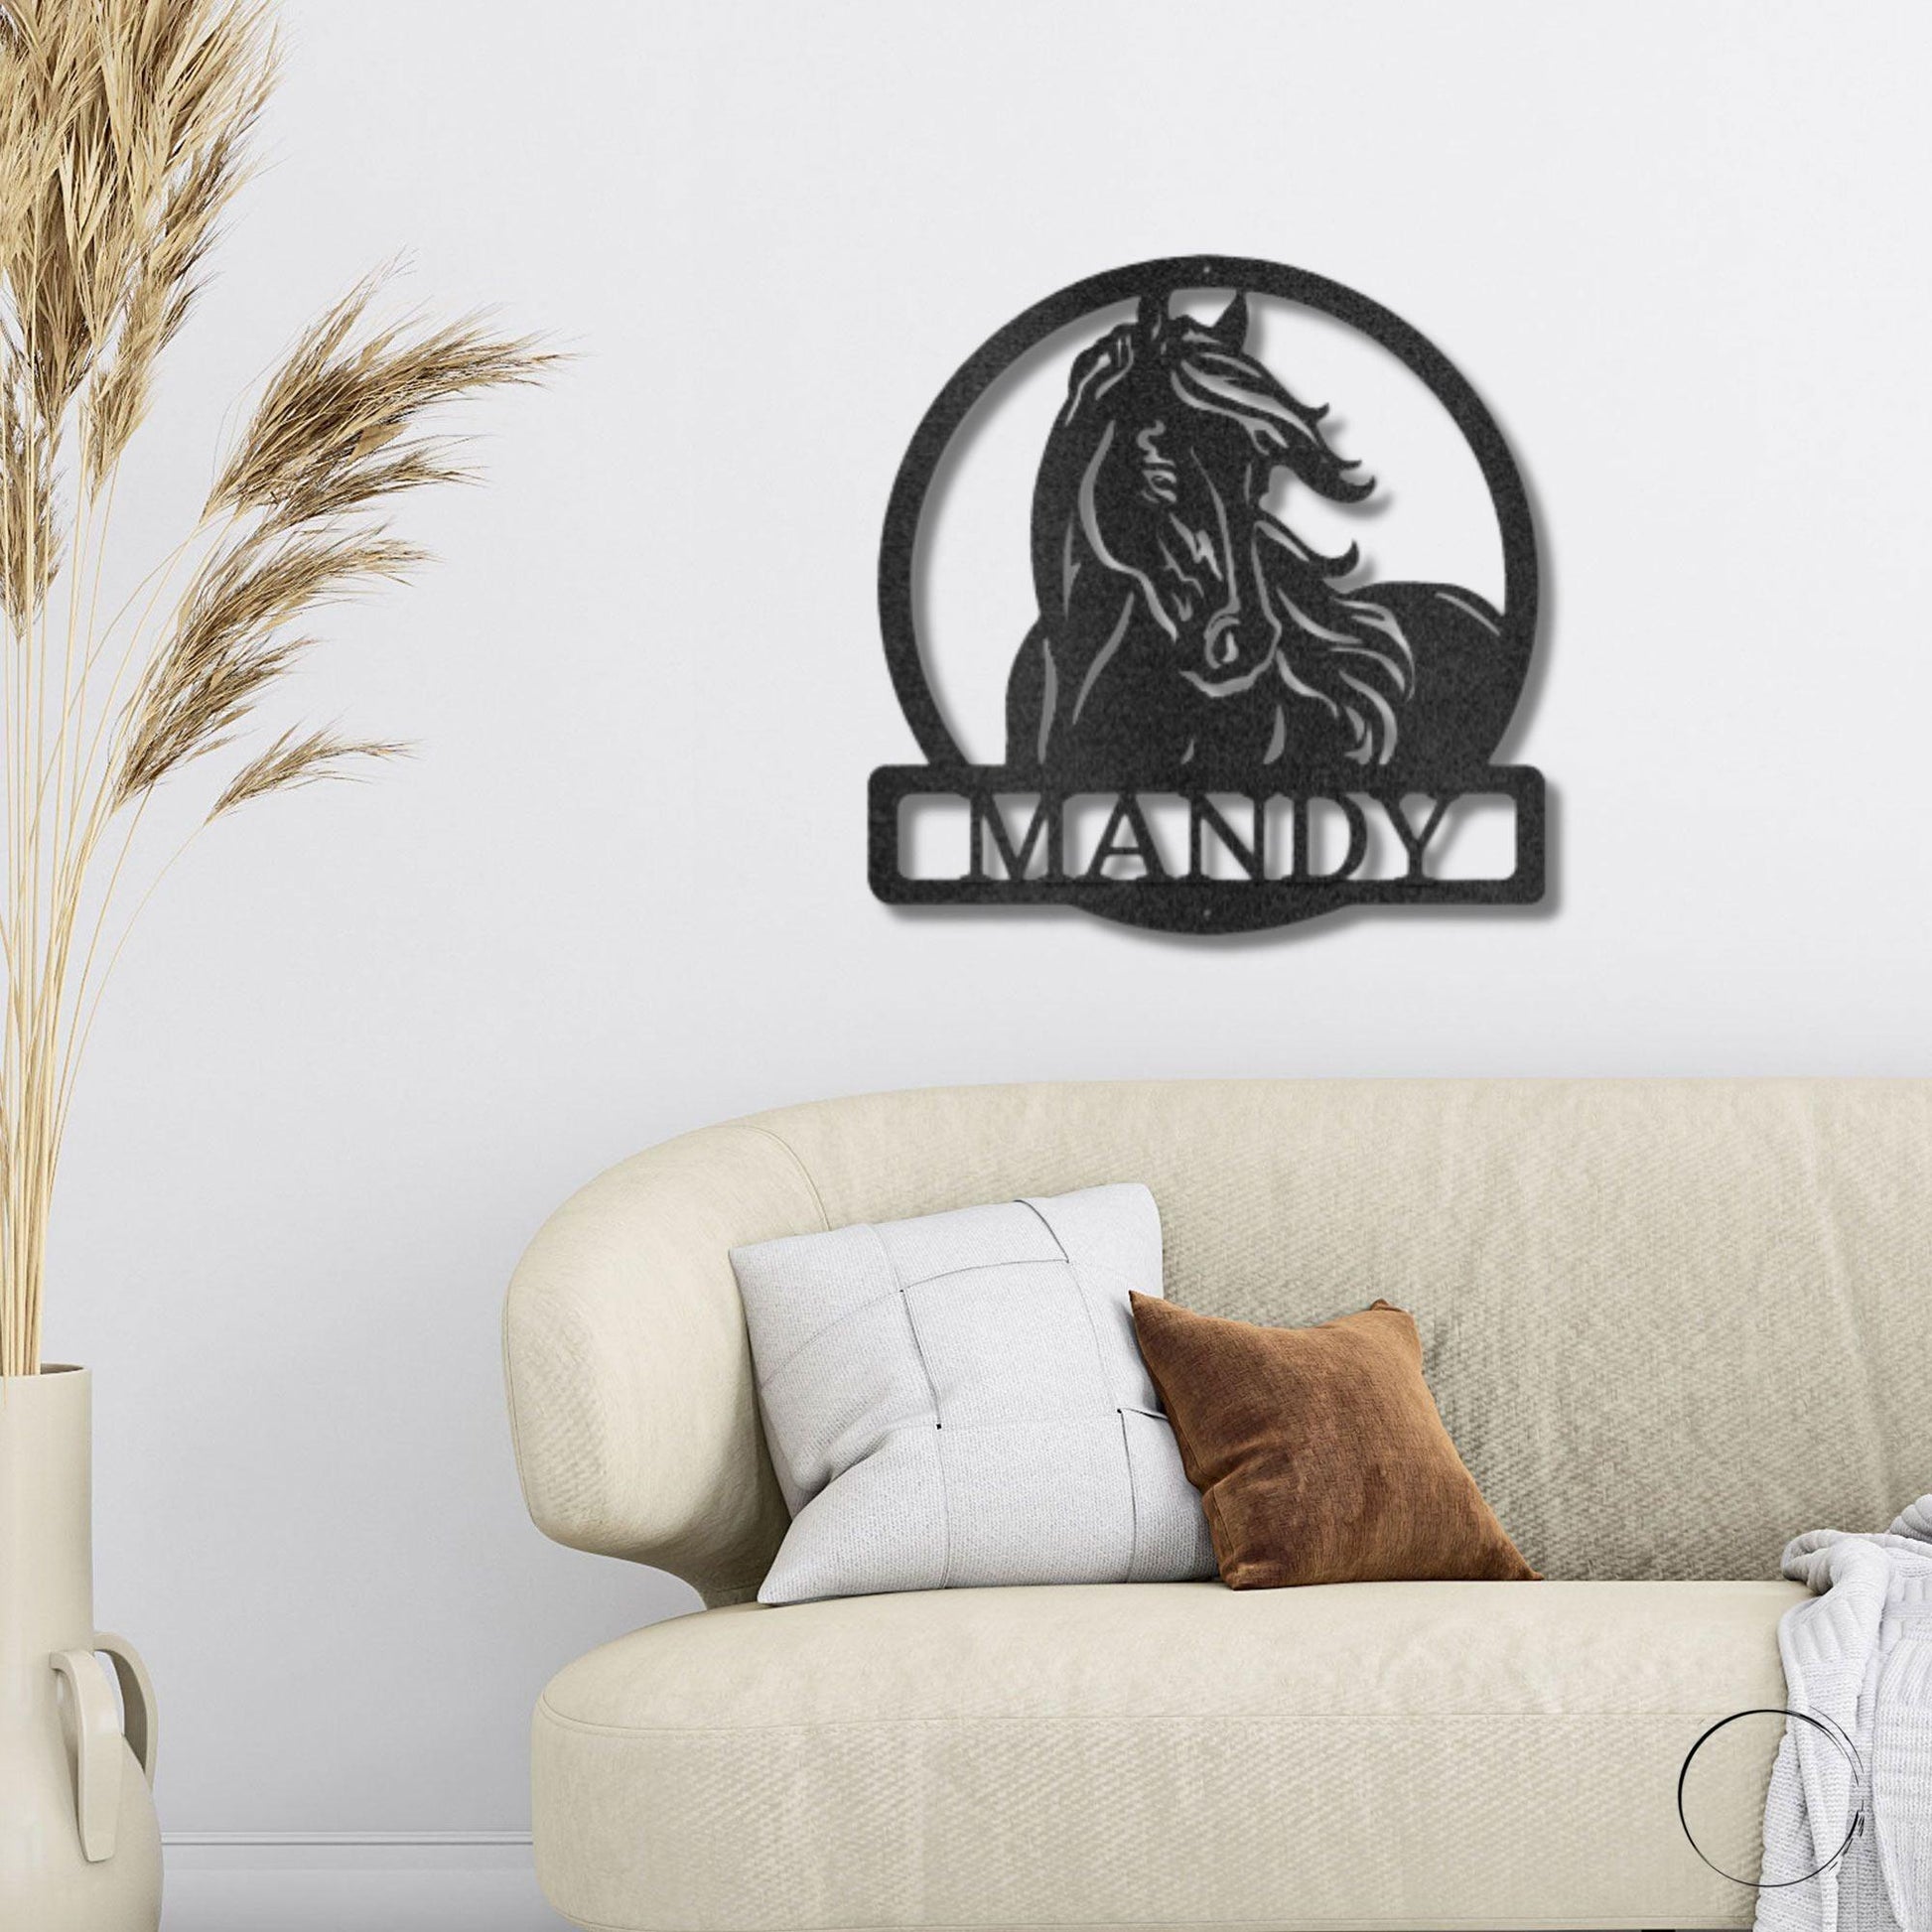 Horse Personalized Metal Wall Art Sign - Mallard Moon Gift Shop